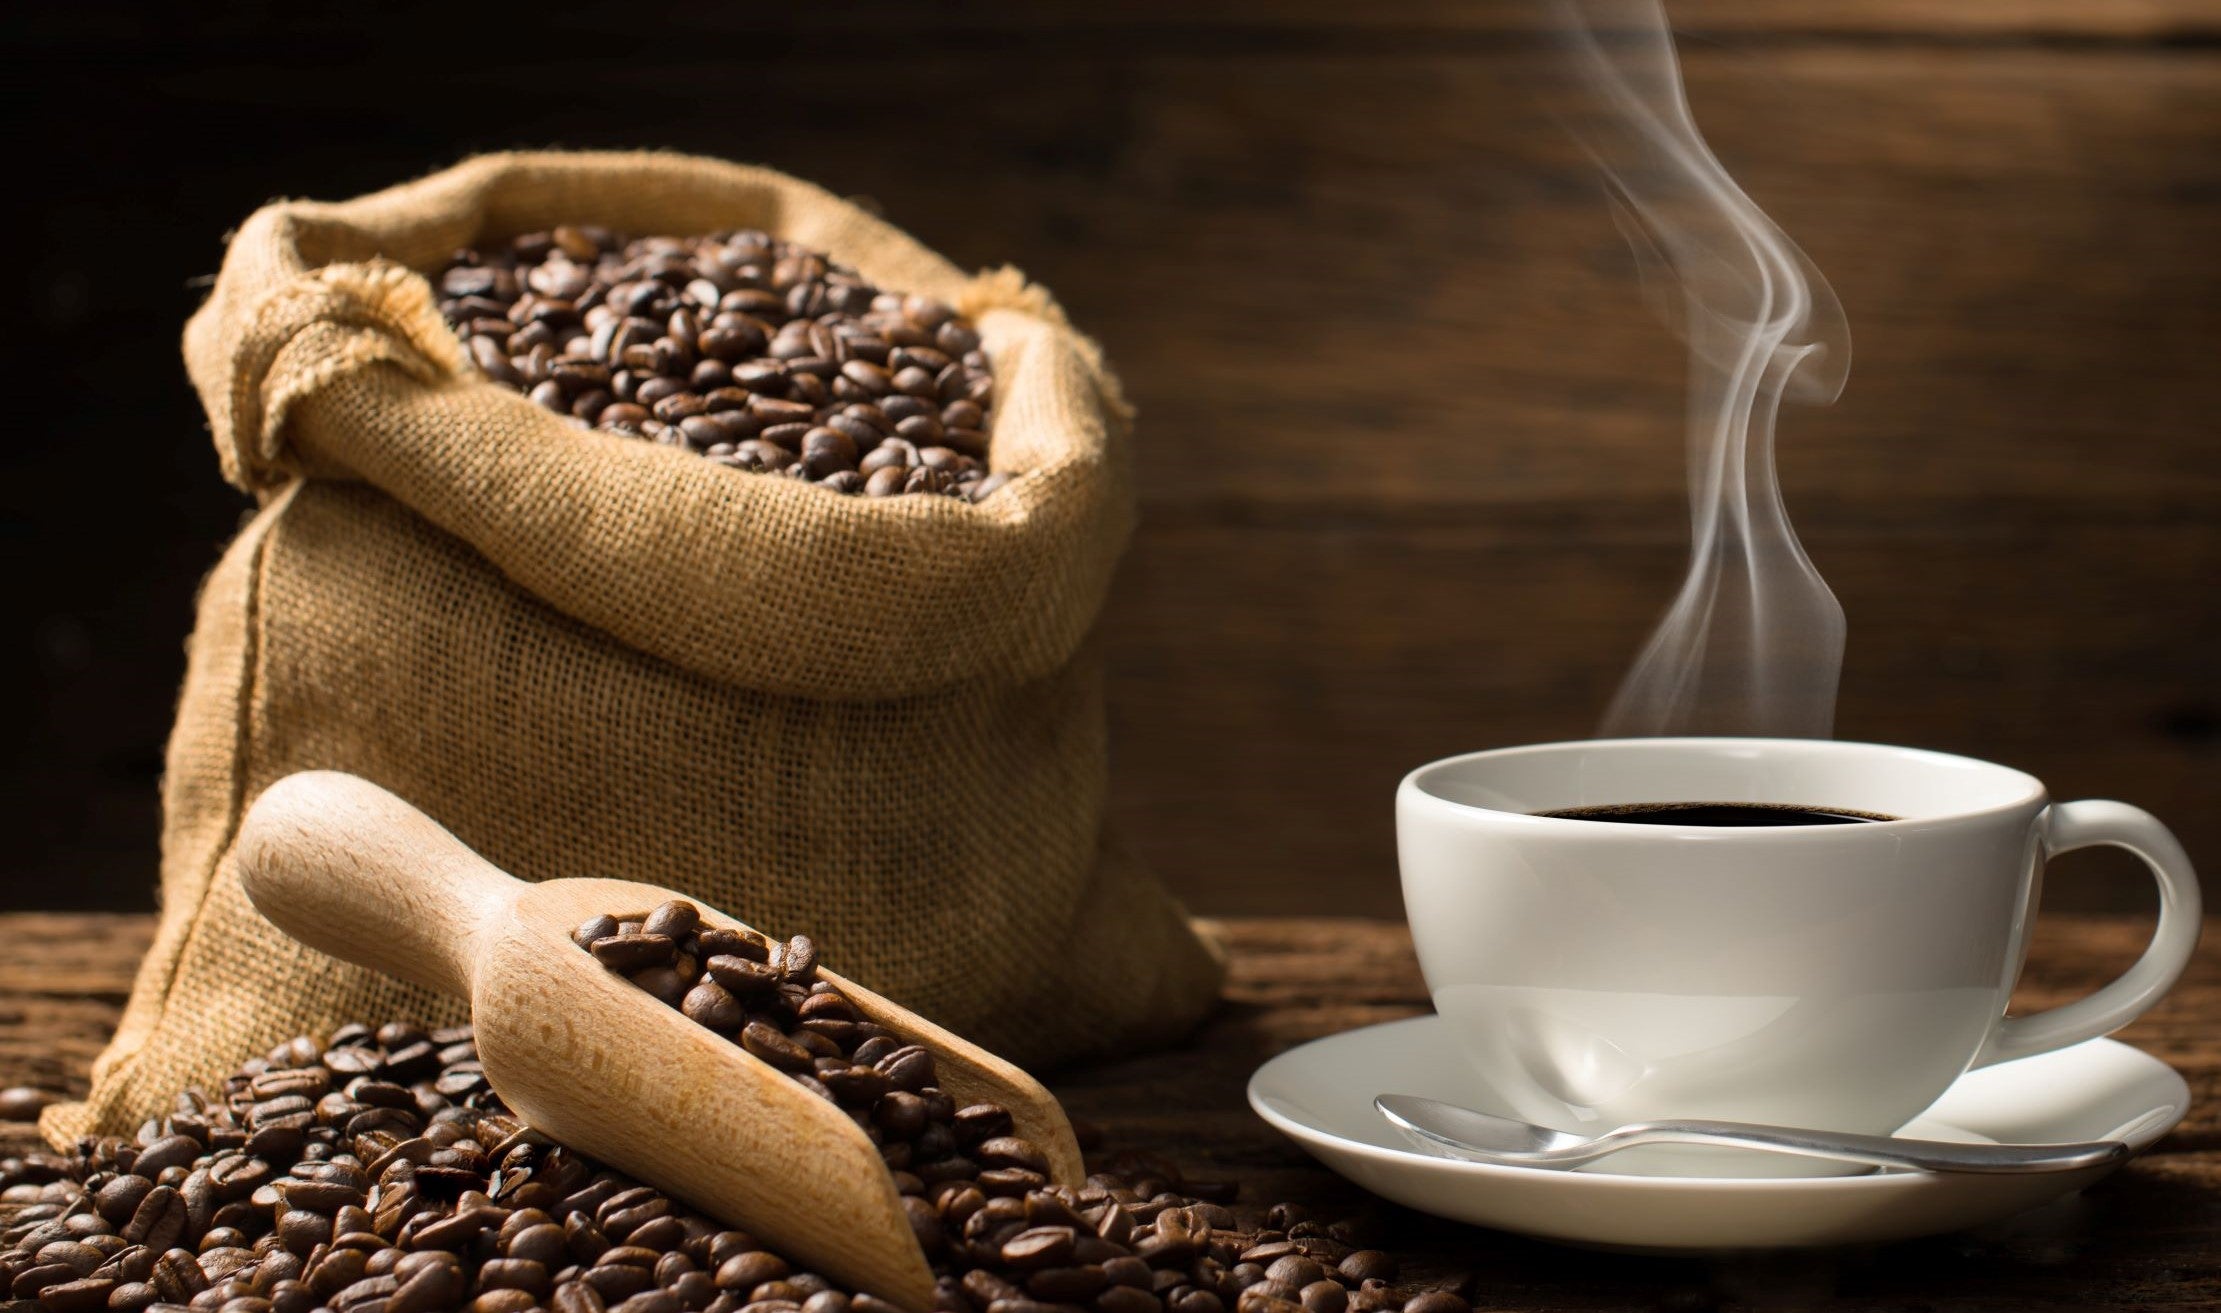 Fresh Roasted Coffee & Steaming Mug